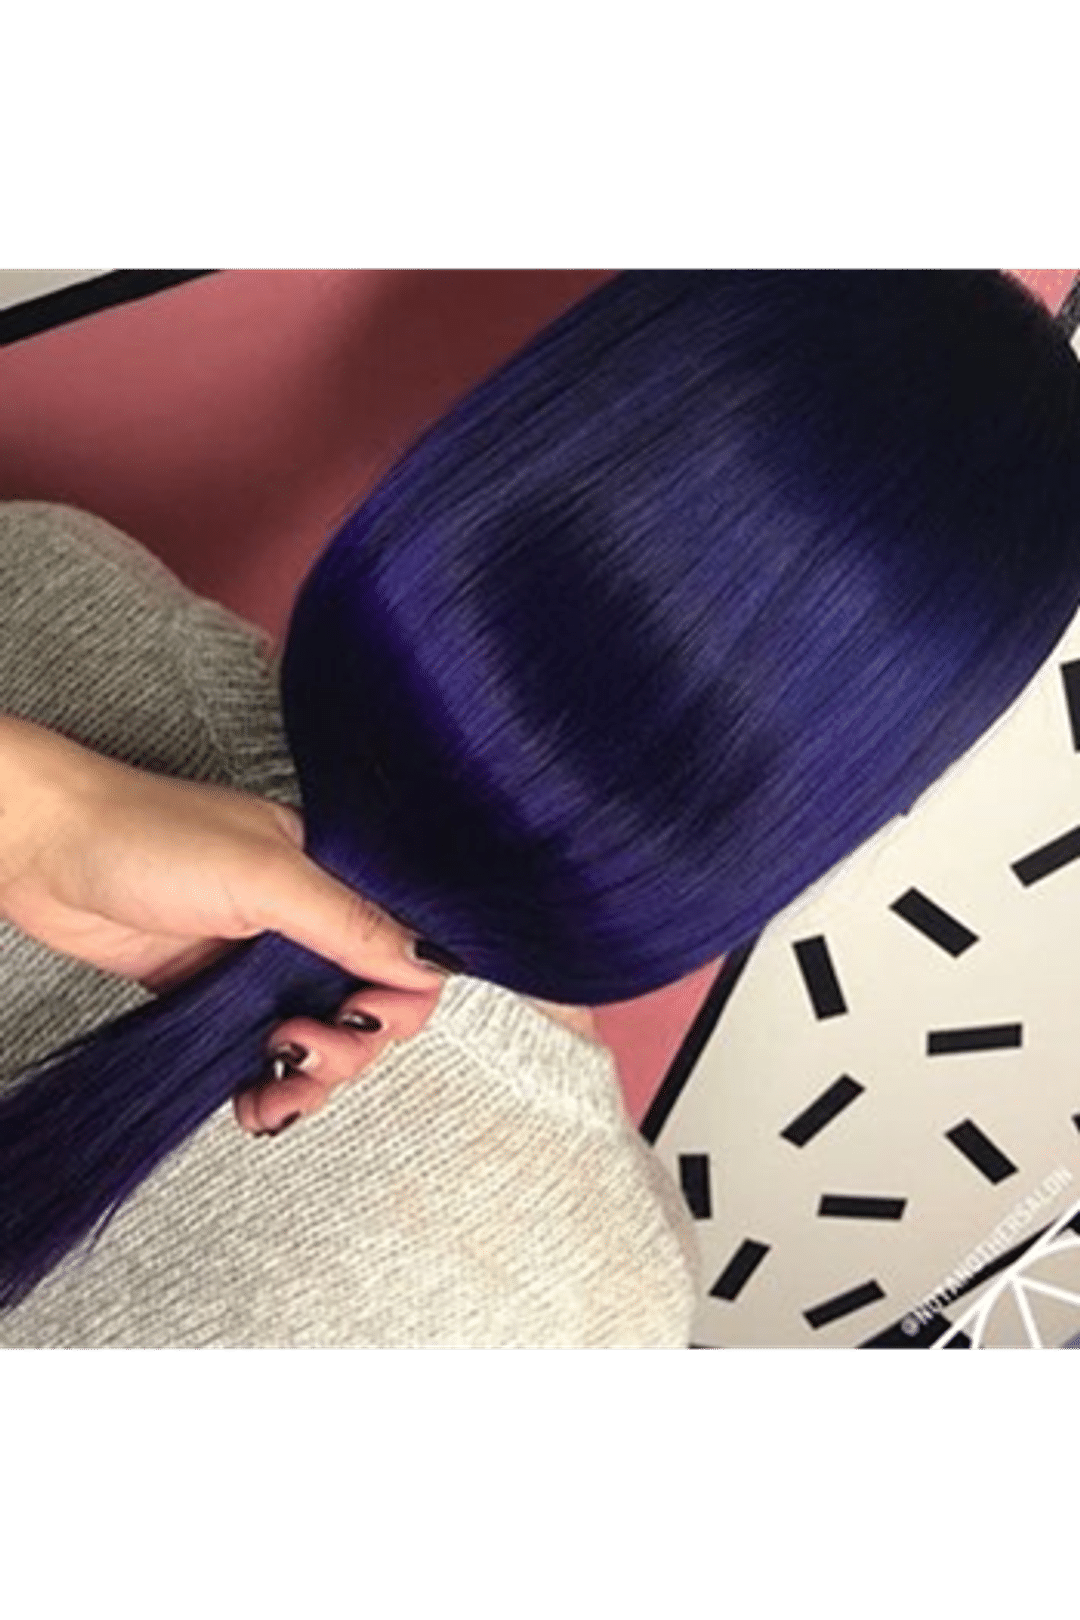 Crazy Color Semi Permanent Hair Color Cream - Violette